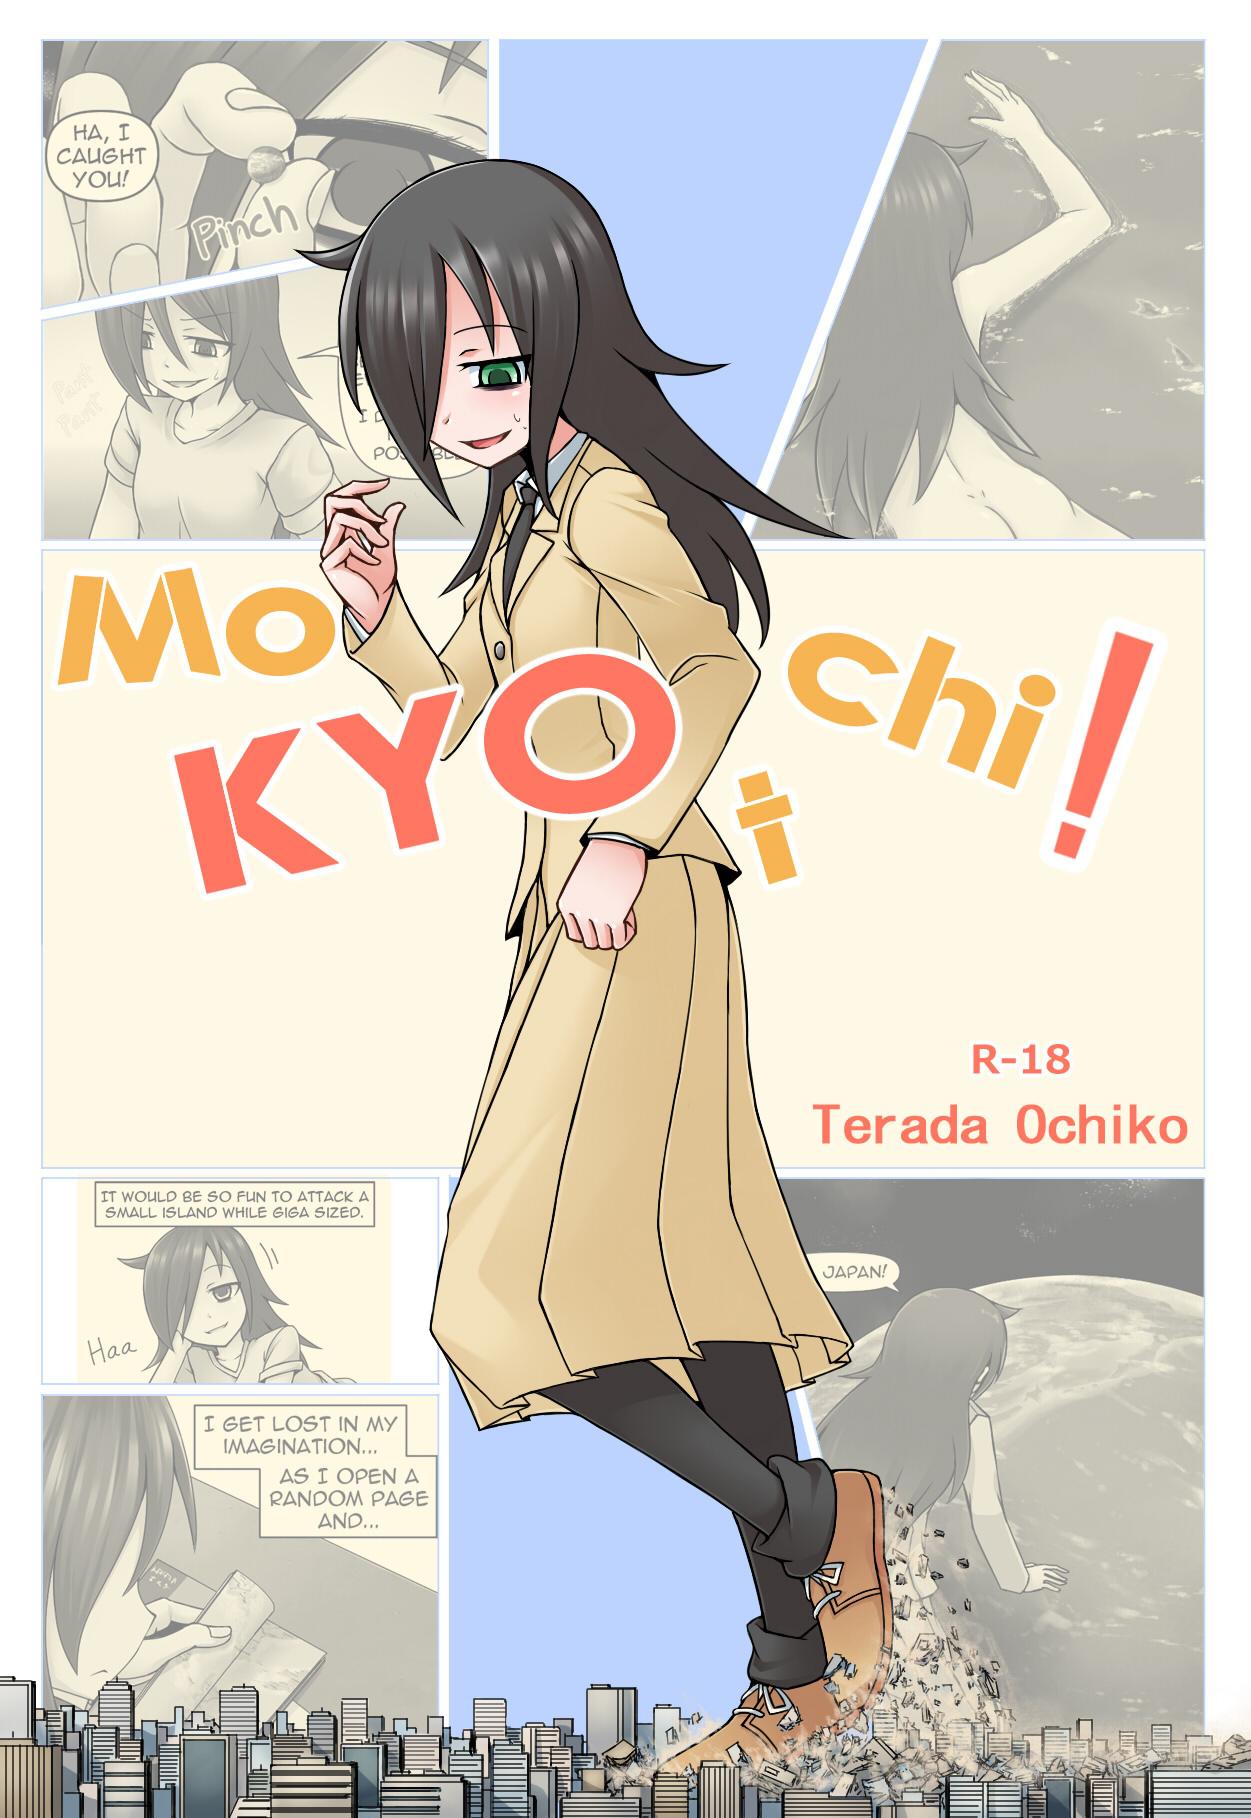 Mokyocchi Japanese + English Version 10